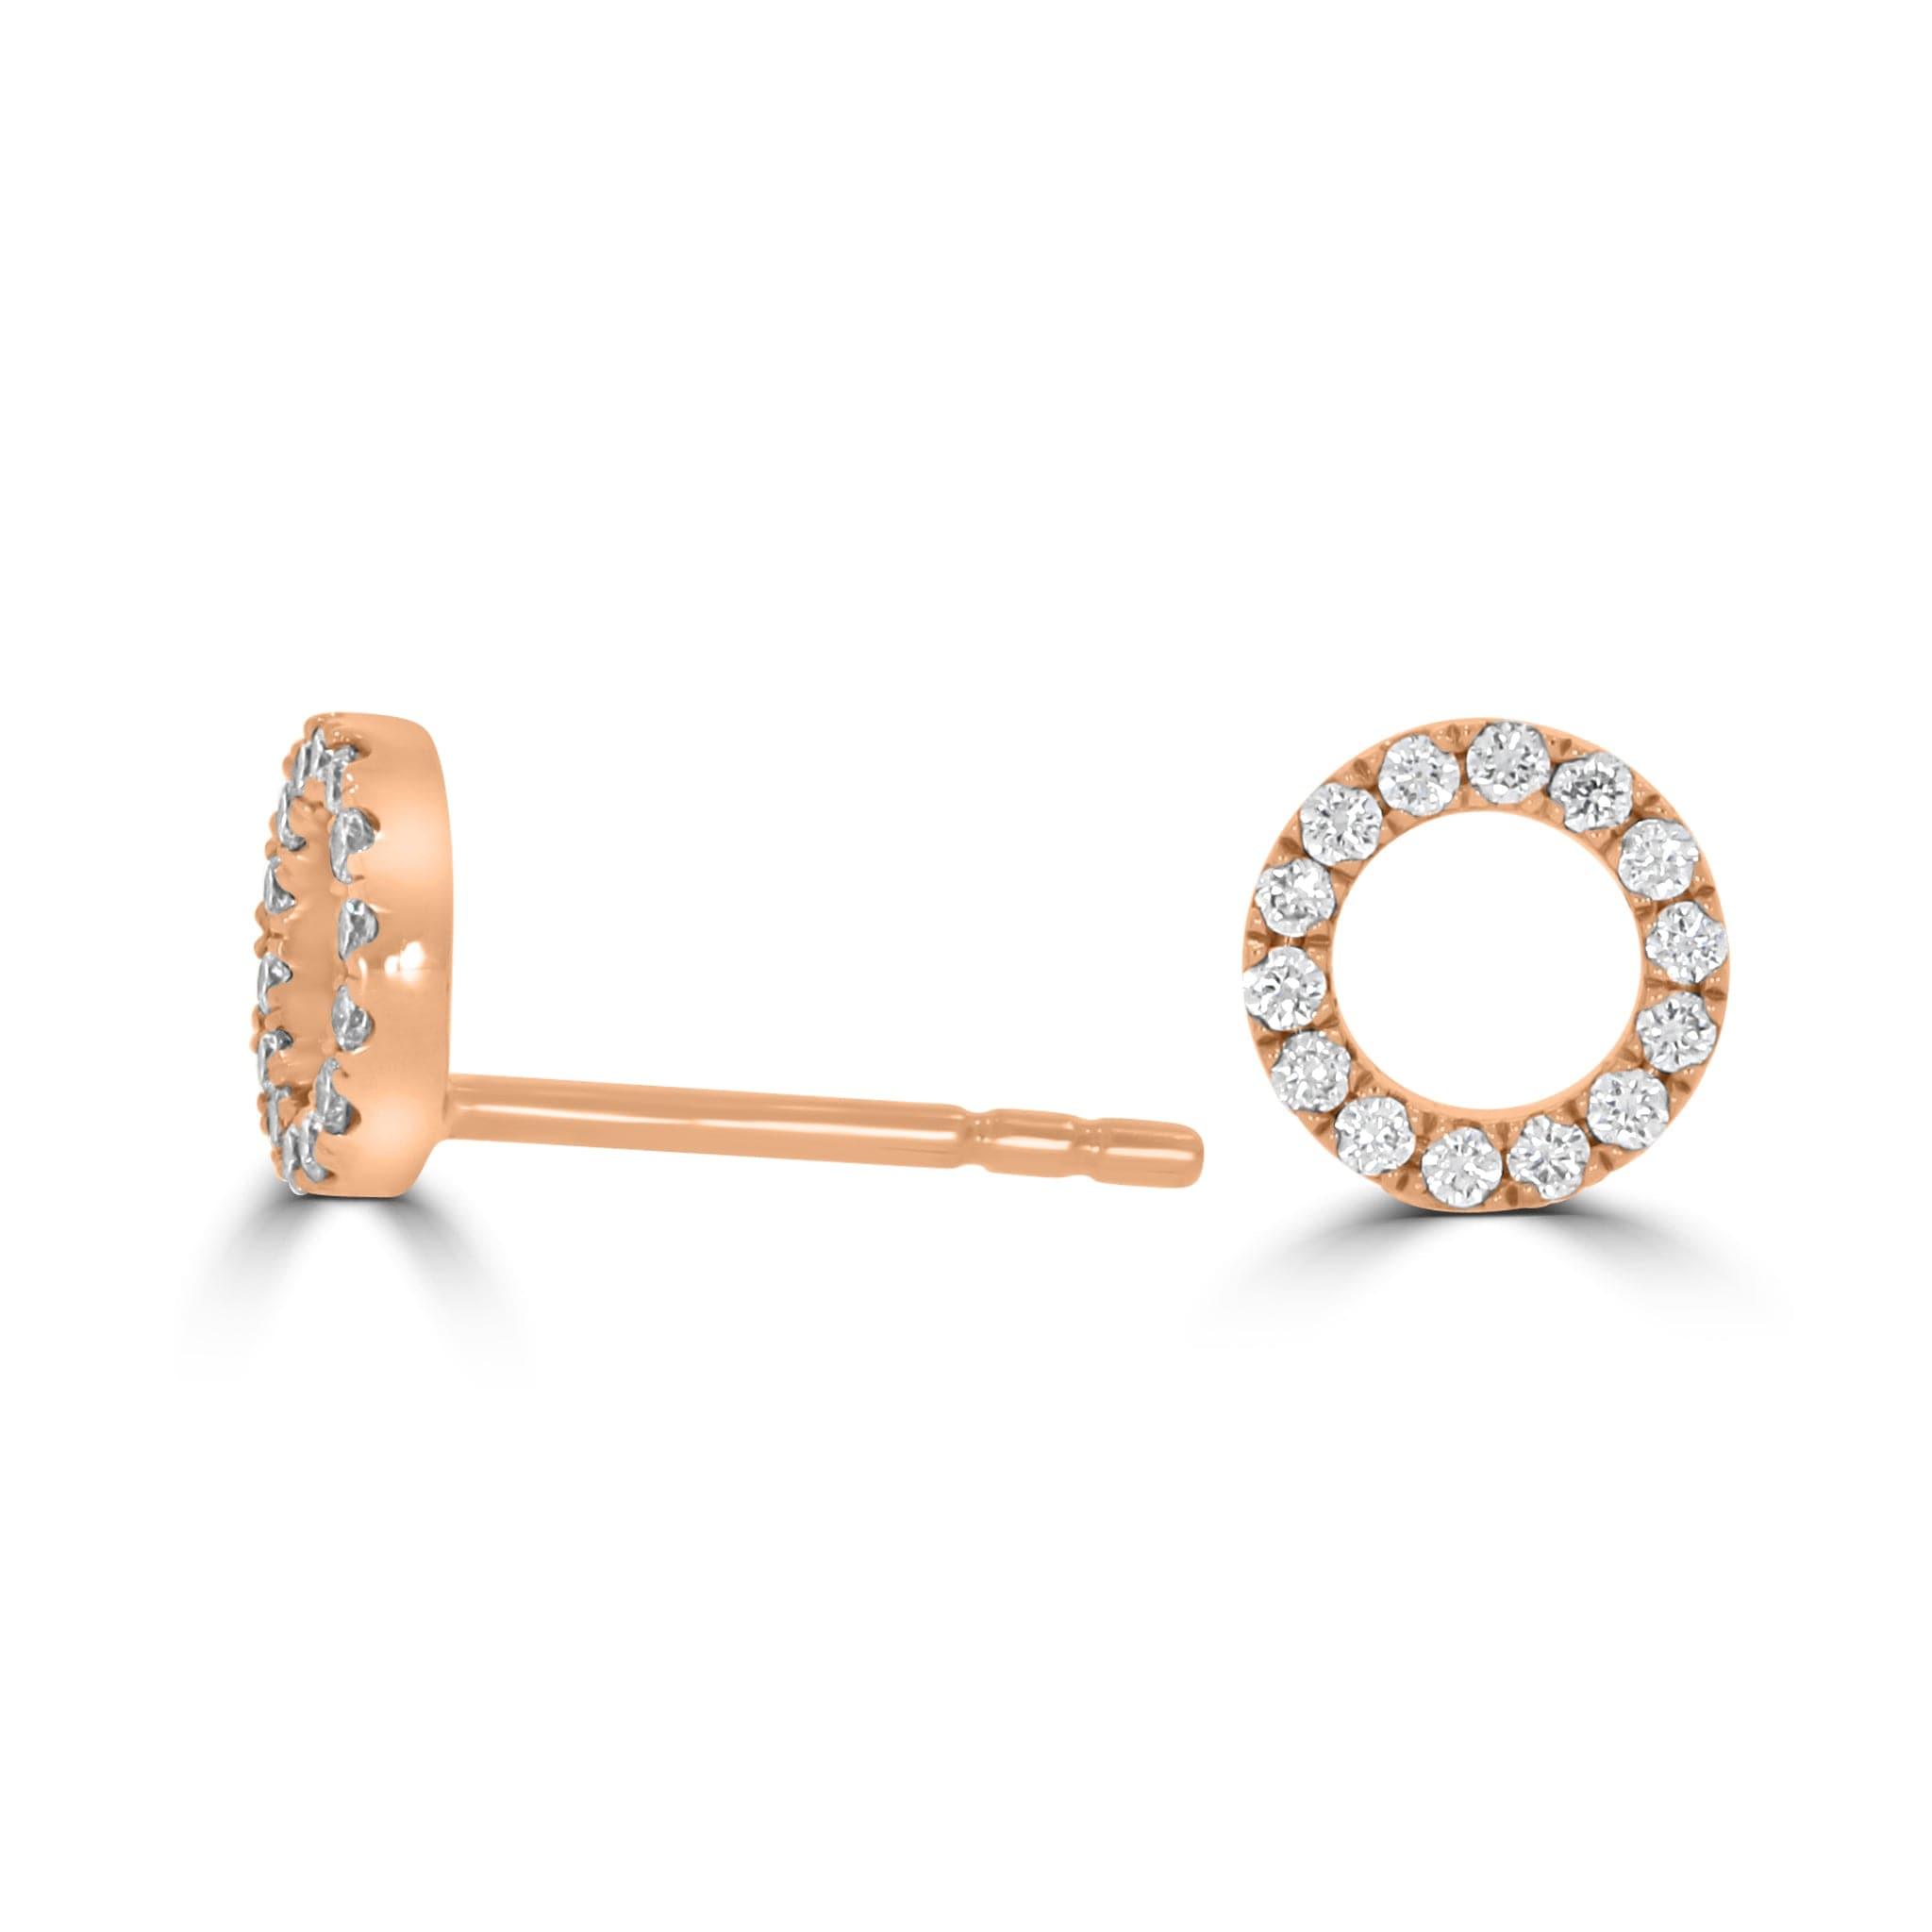 Circle of Life Stud Earrings | Rose Gold 7mm - Rosendorff Diamond Jewellers